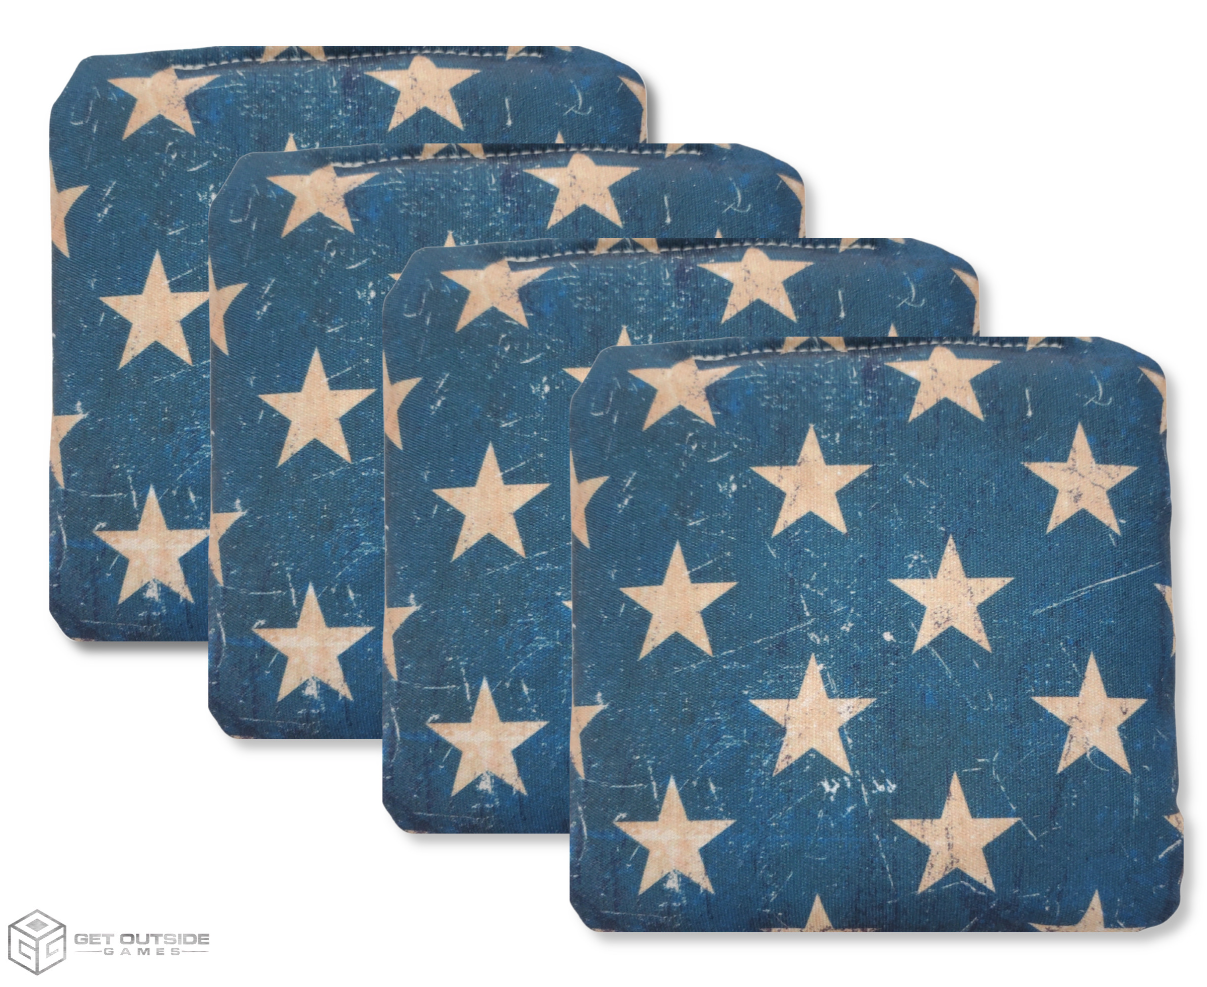 USA stars cornhole bags